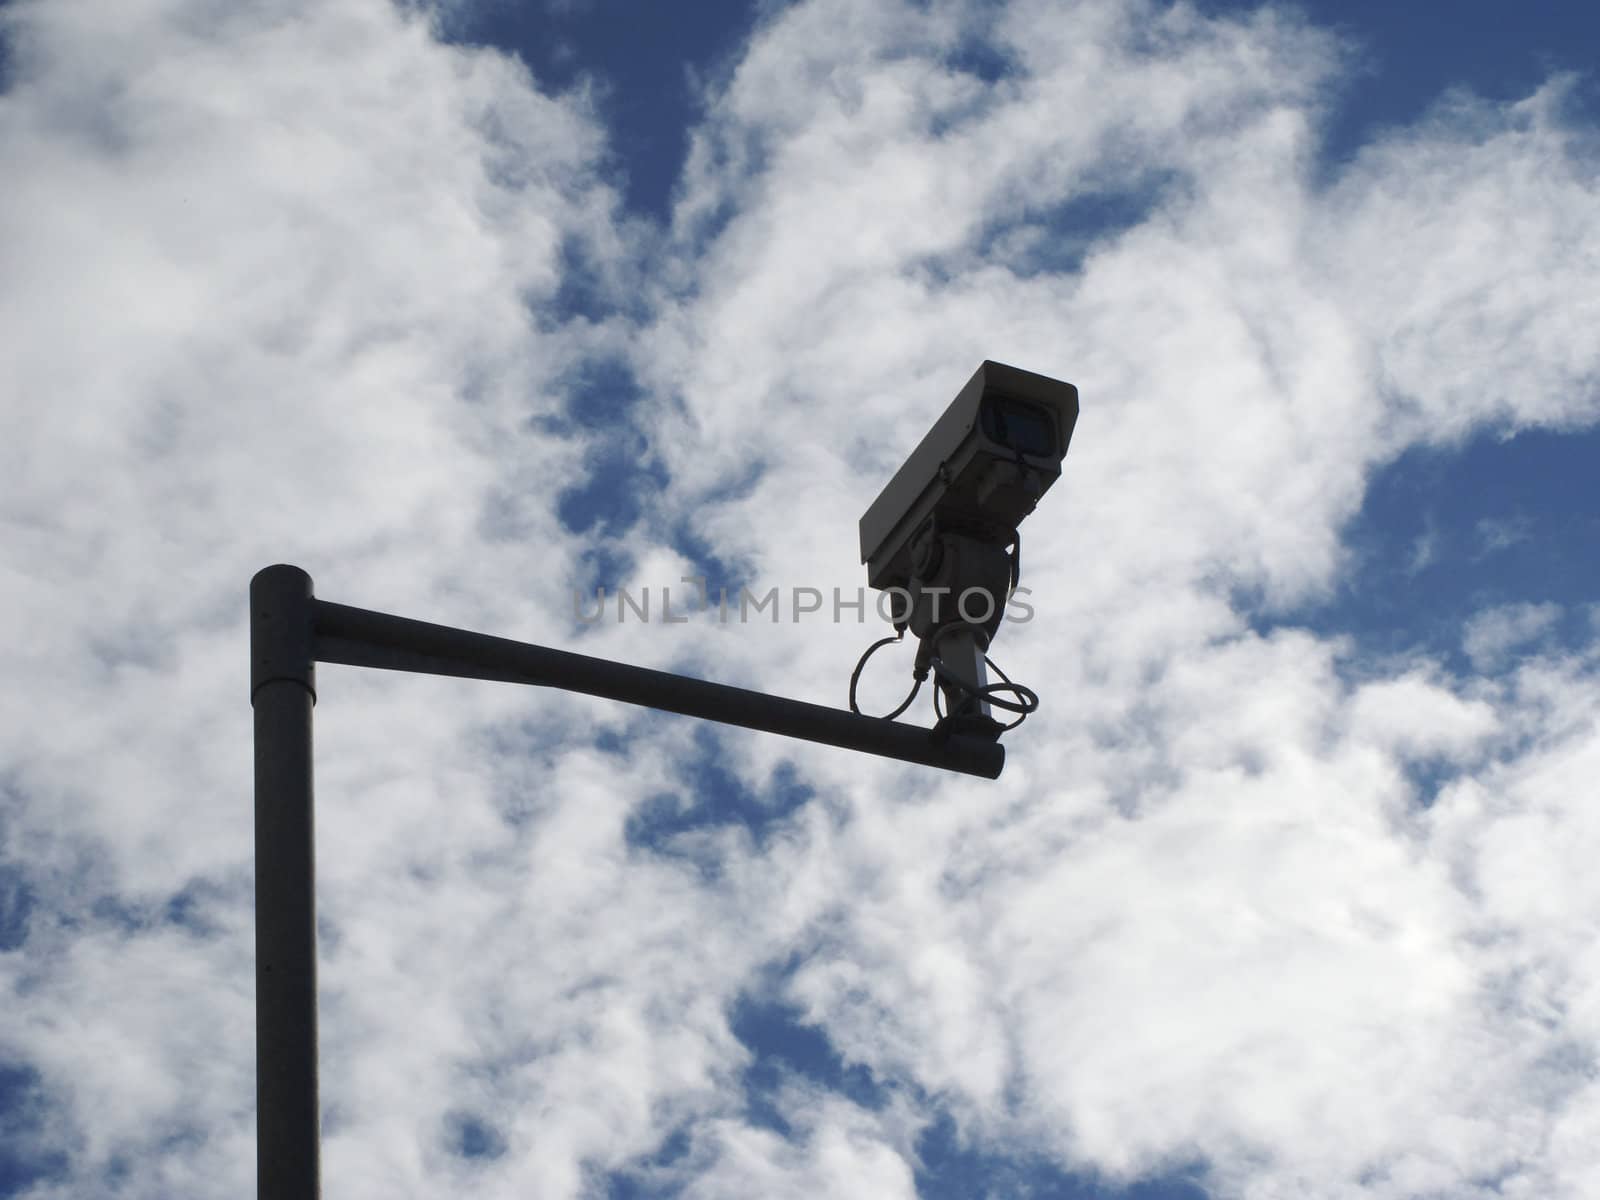 CCTV Camera by alister